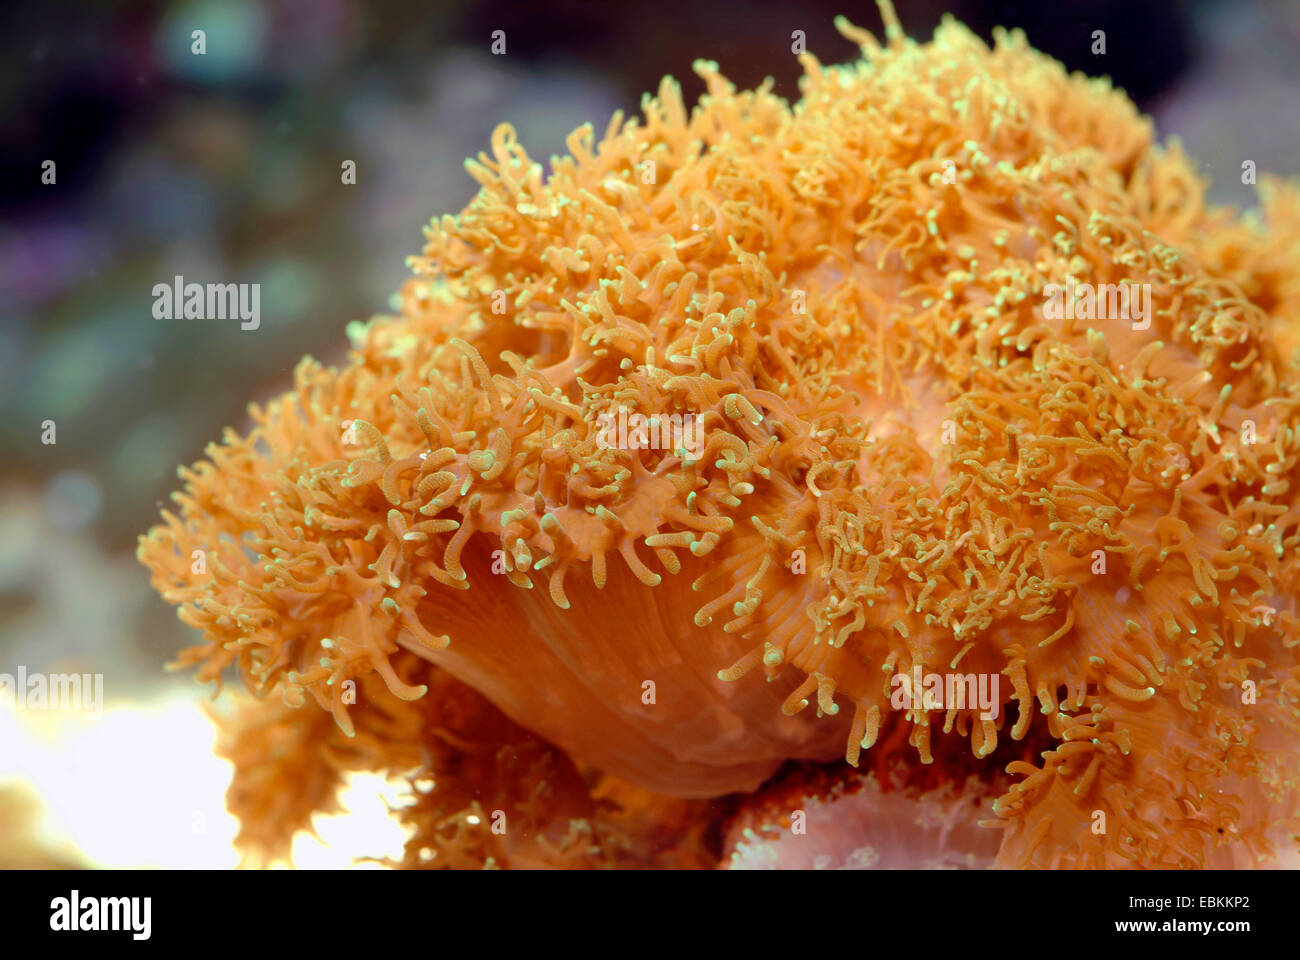 Mushroom Anemone (Rhodactis spec.), side view Stock Photo